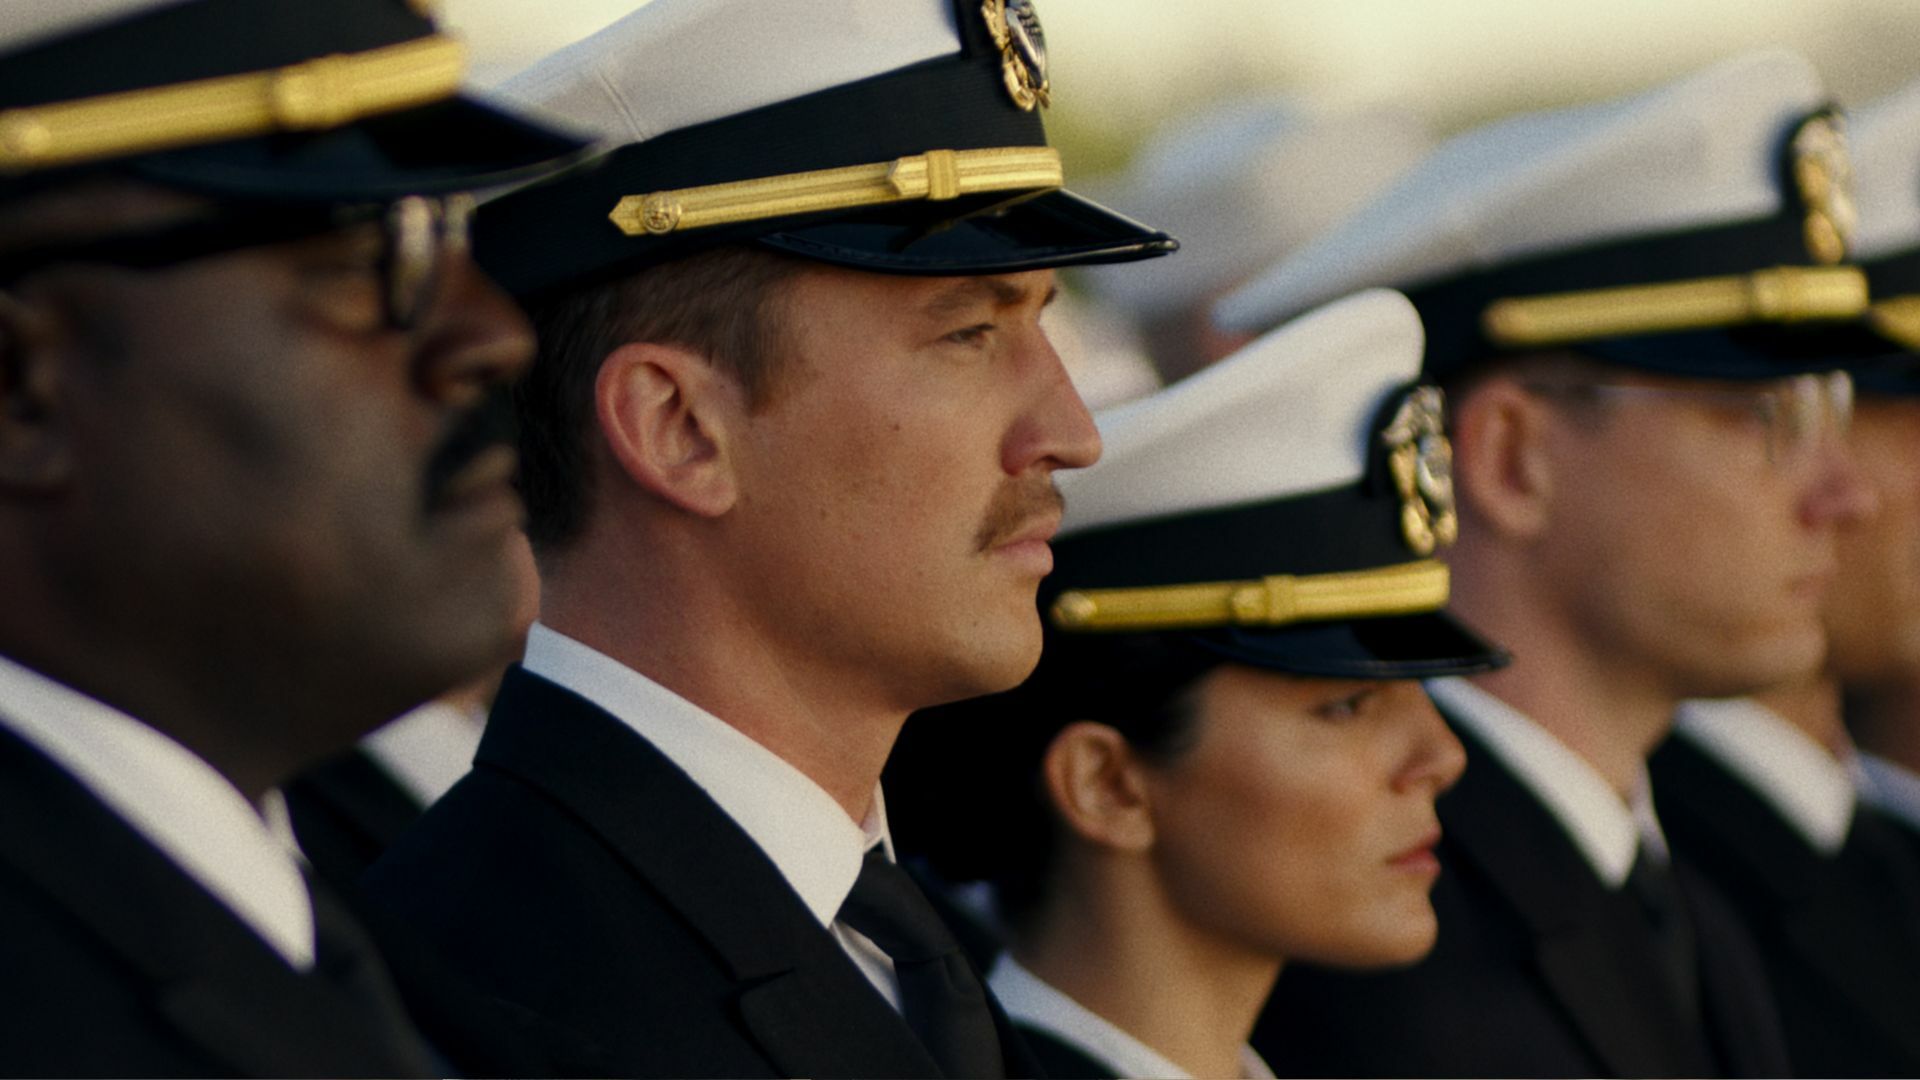 Naval pilots in uniform line up